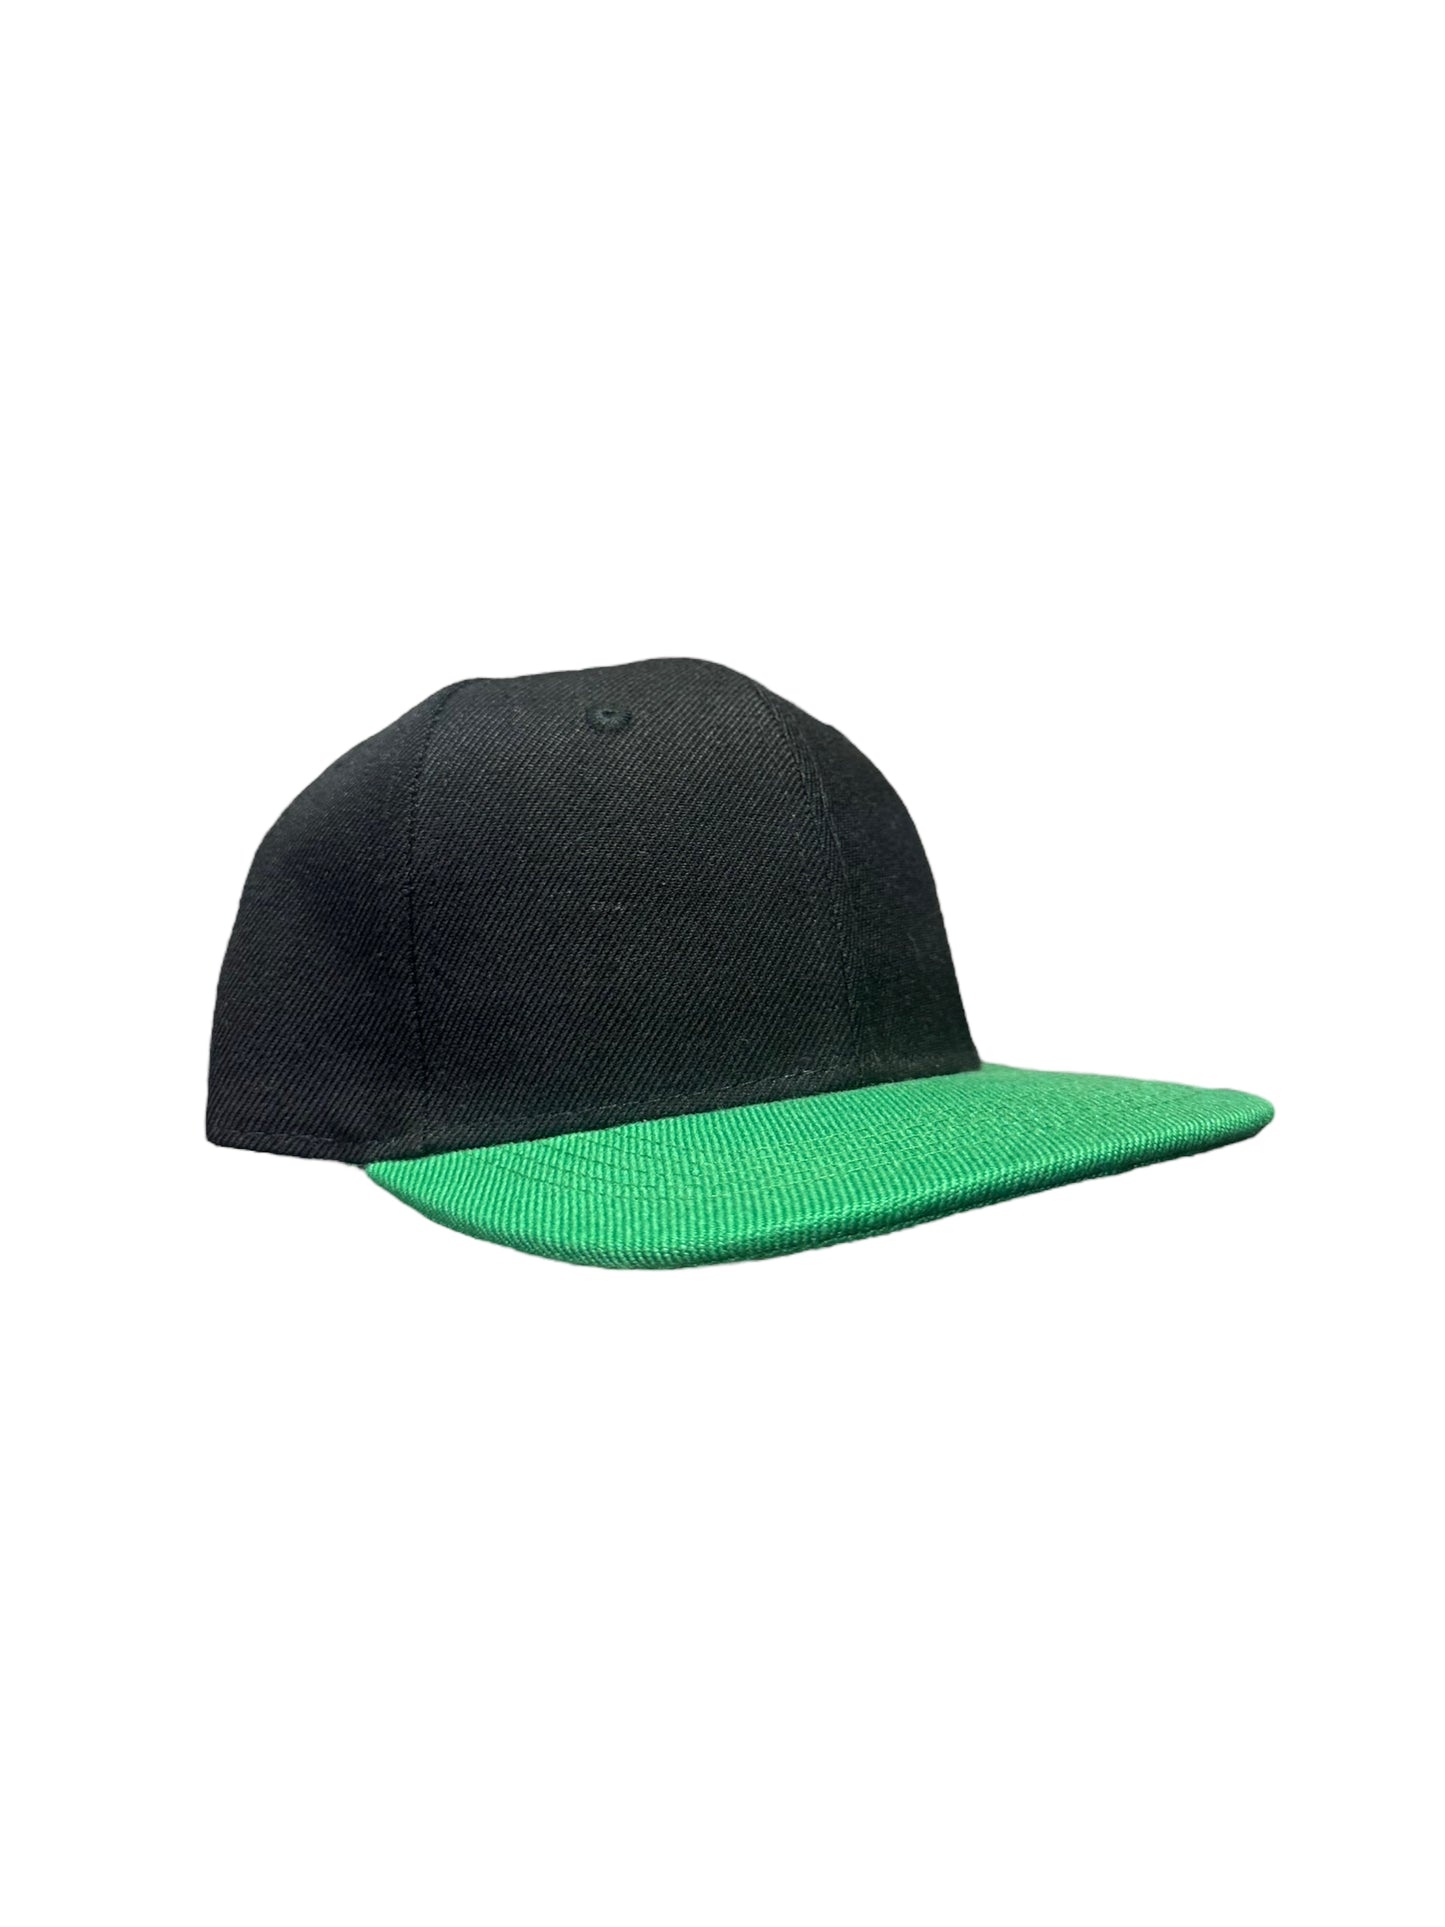 Baby hats-Green & Black SnapBack